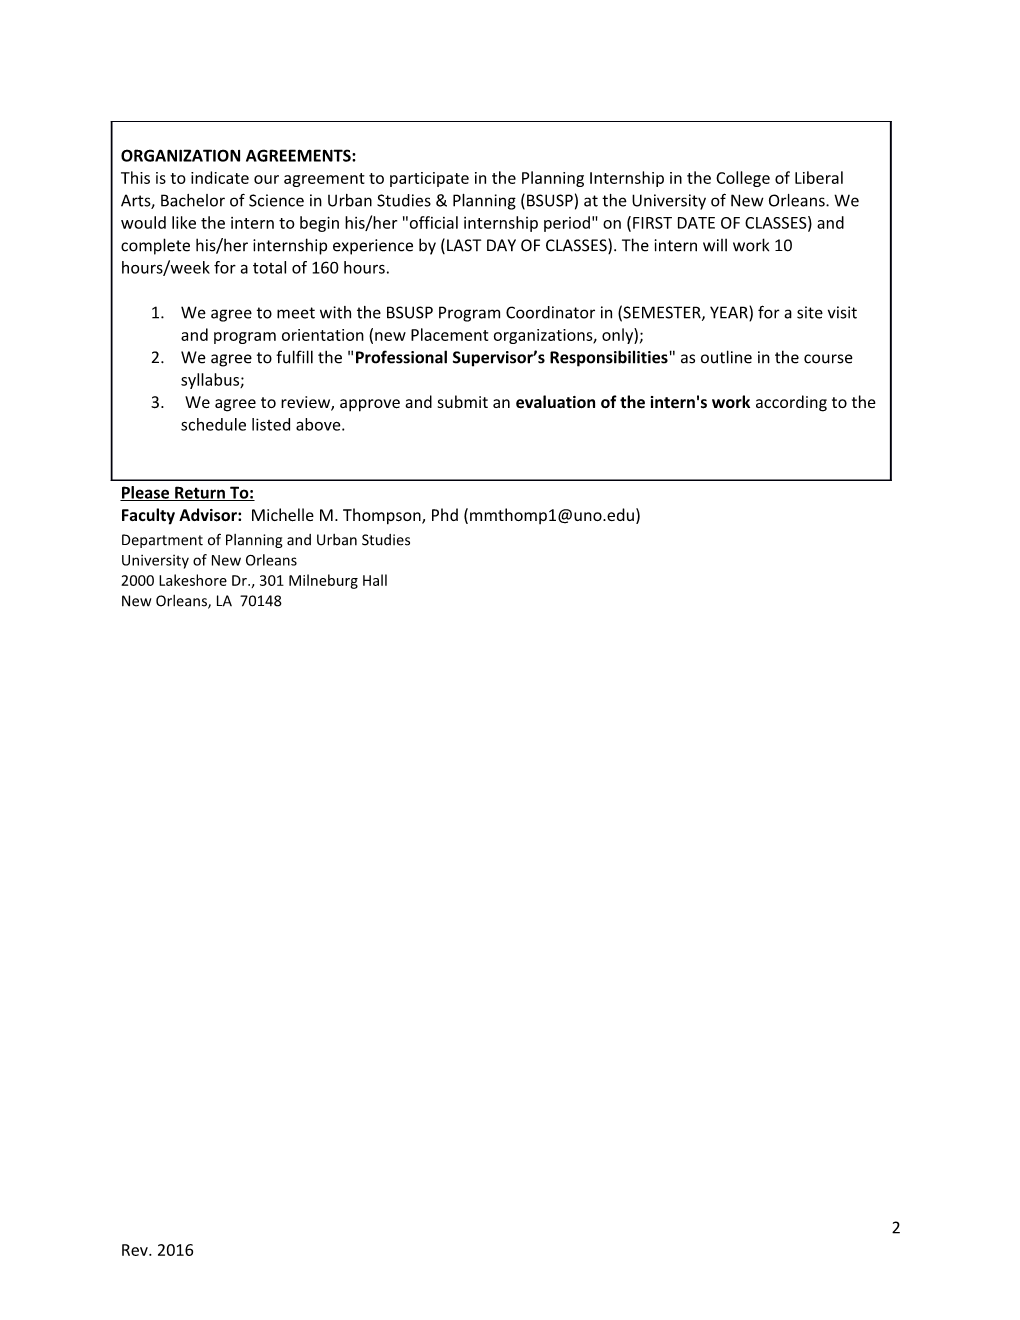 URBN 3998 Planning Internship: Placement Proposal Application